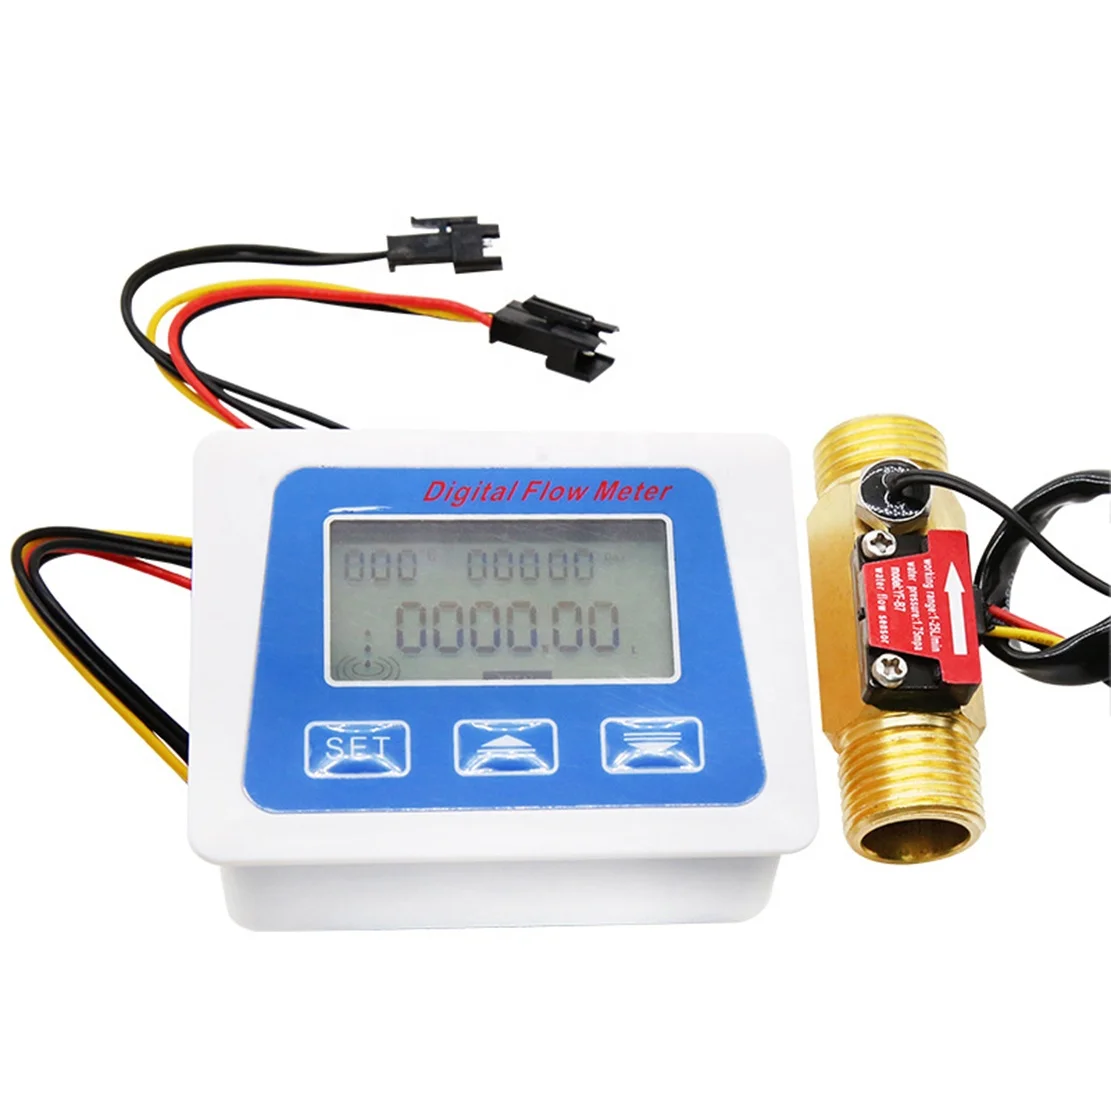 

Taidacent Low Power Consumption Digital Display Electronic Water Meter Digital Flow Meter Battery Powered Flow Rate Meter